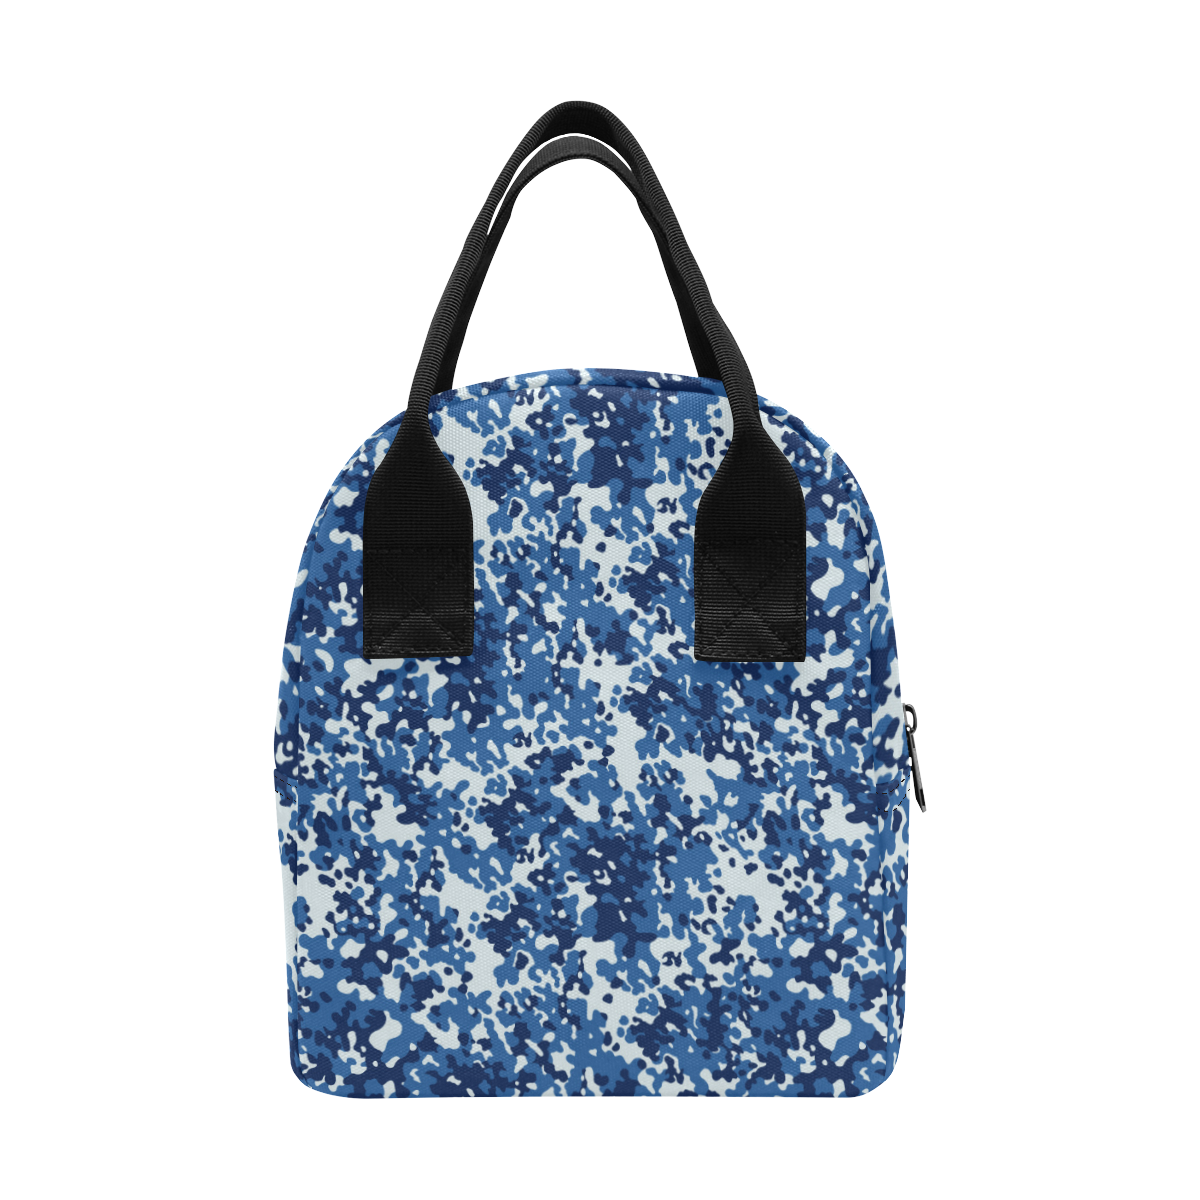 Digital Blue Camouflage Zipper Lunch Bag (Model 1689)